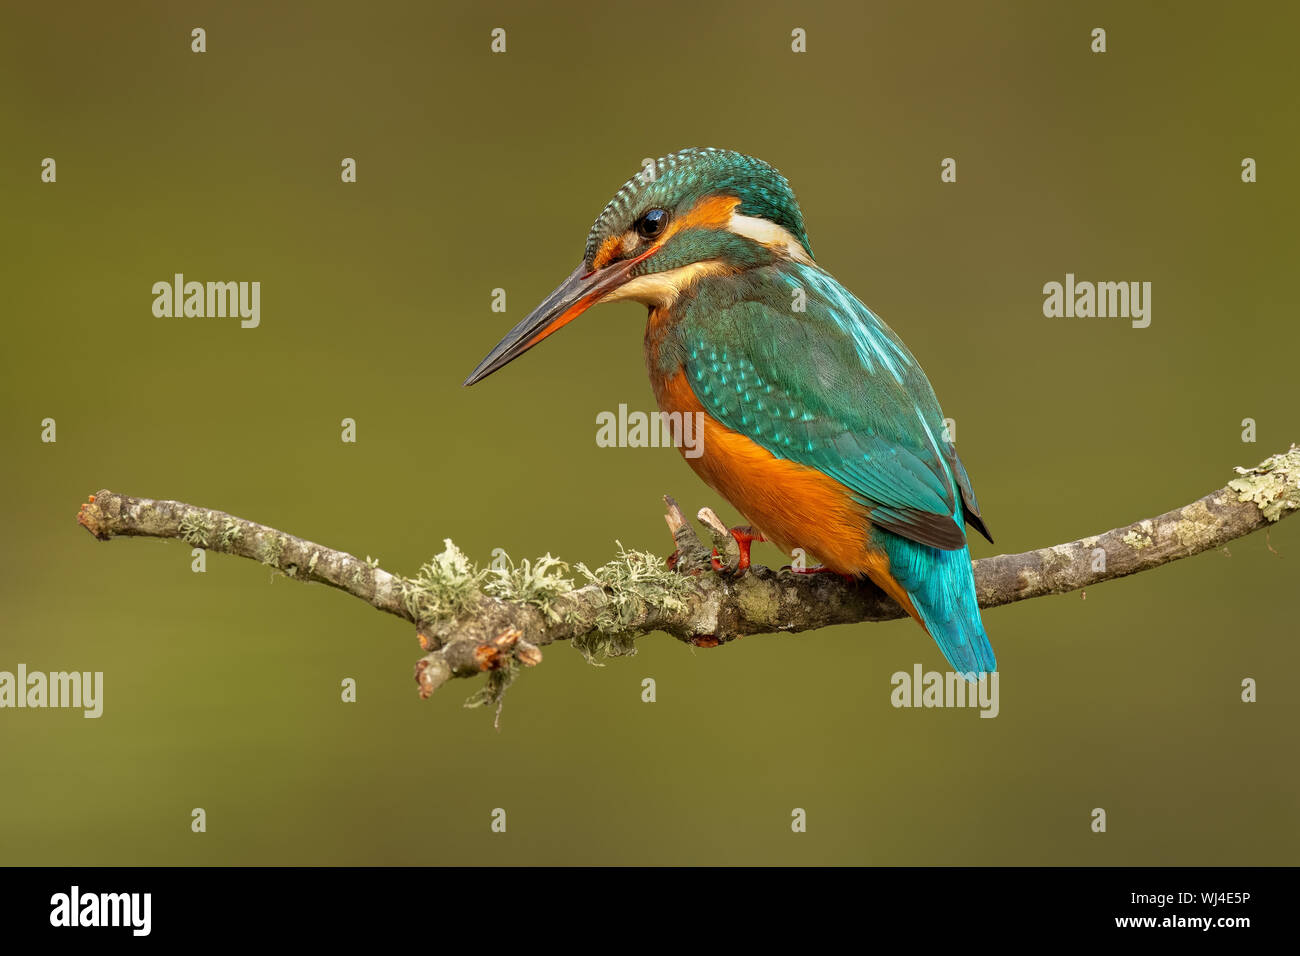 Common Kingfisher (Juvenile Female) - Guarda-rios (juvenil femea) - Alcedo atthis